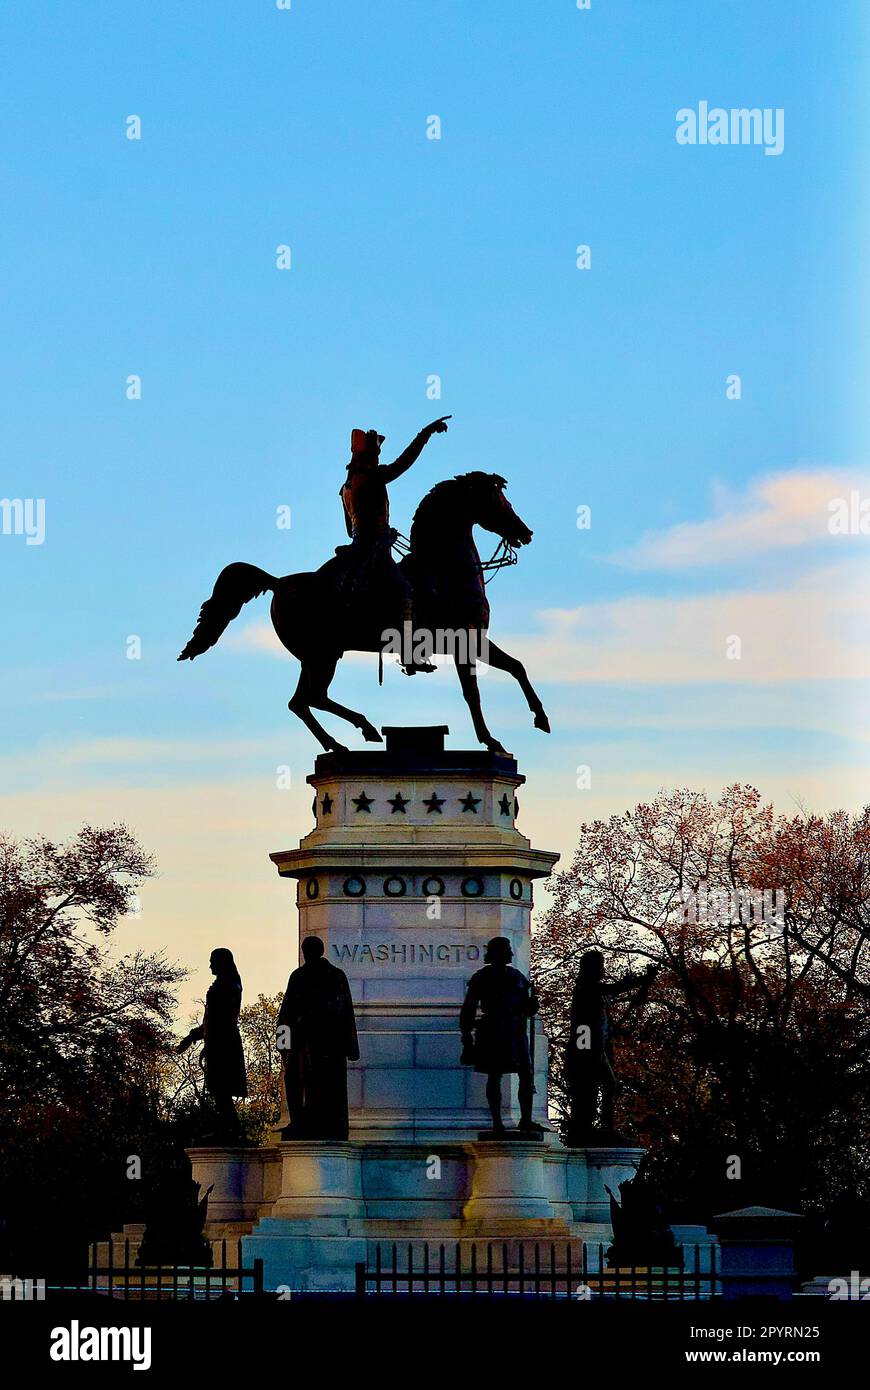 The Virginia Washington Monument is a 19th-century neoclassical bronze statue of President George Washington located in Capitol Square, Richmond, VA. Stock Photo